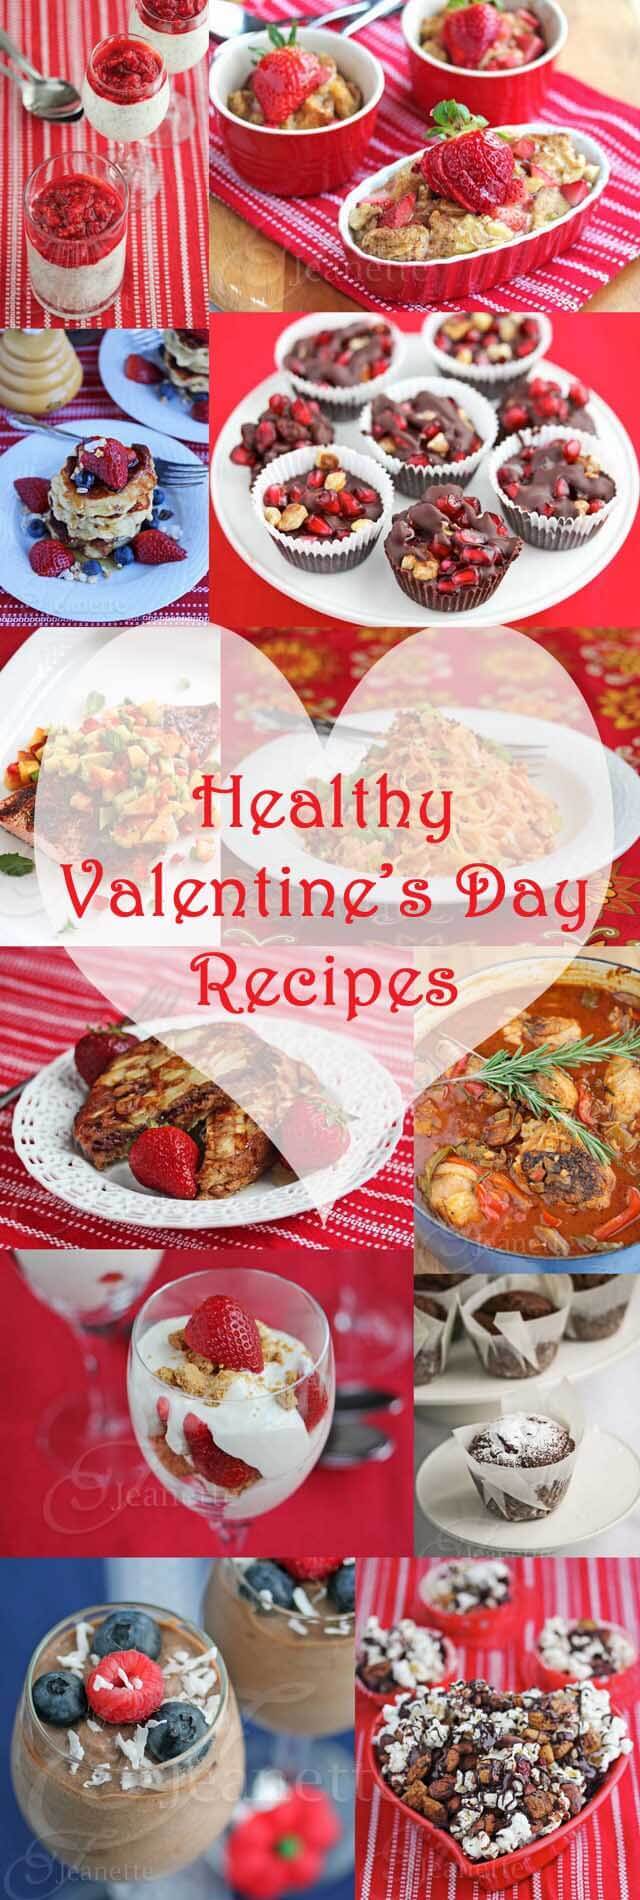 Healthy Valentine's Day Recipes